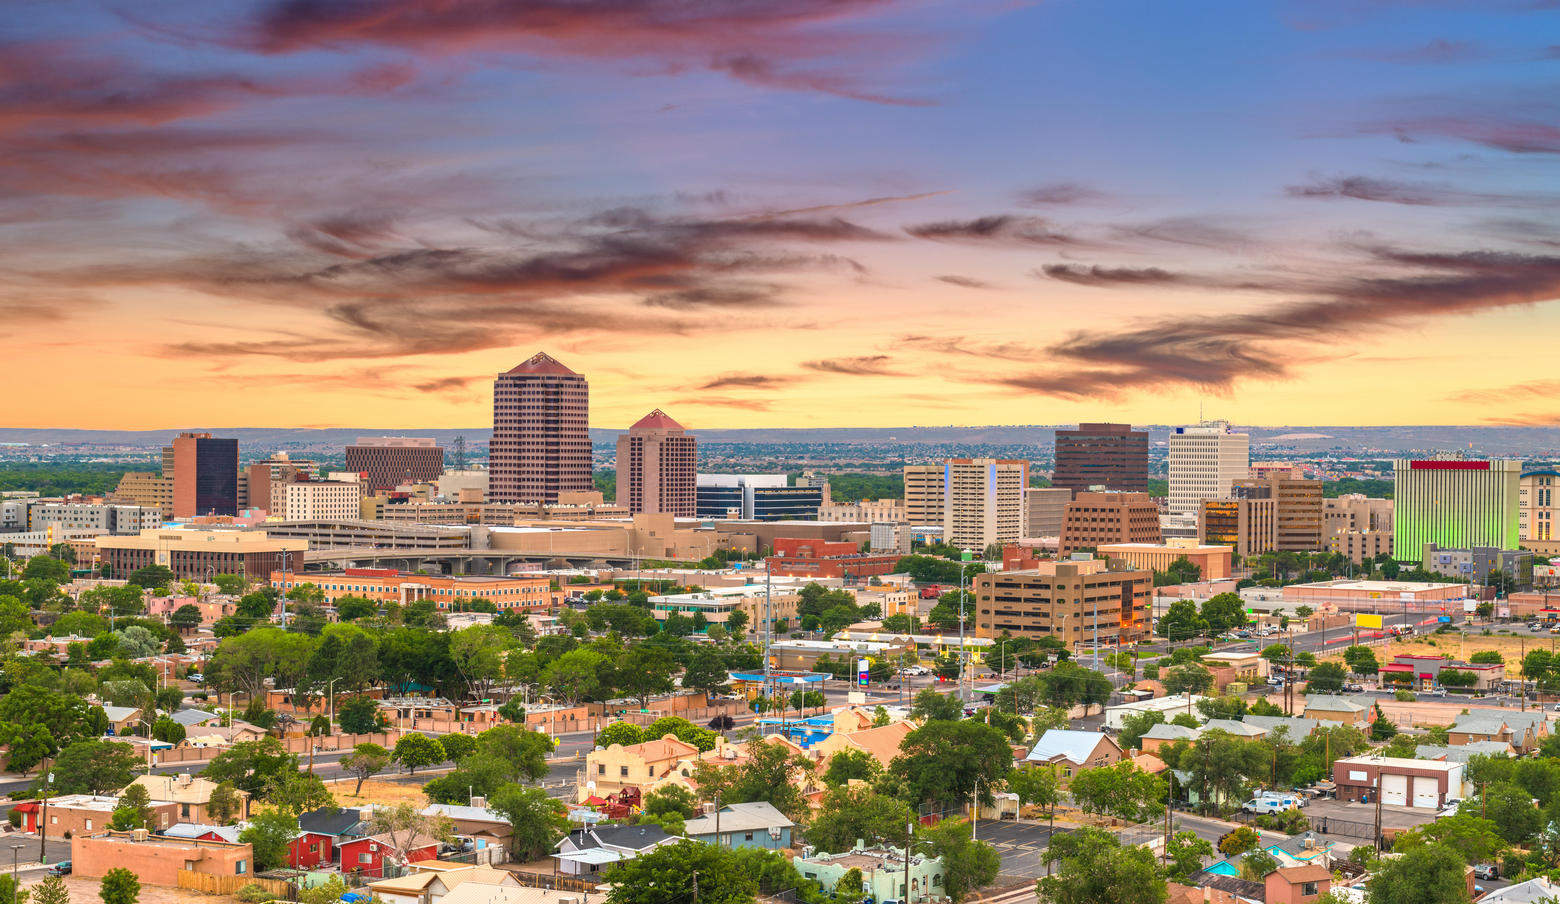 Albuquerque city view